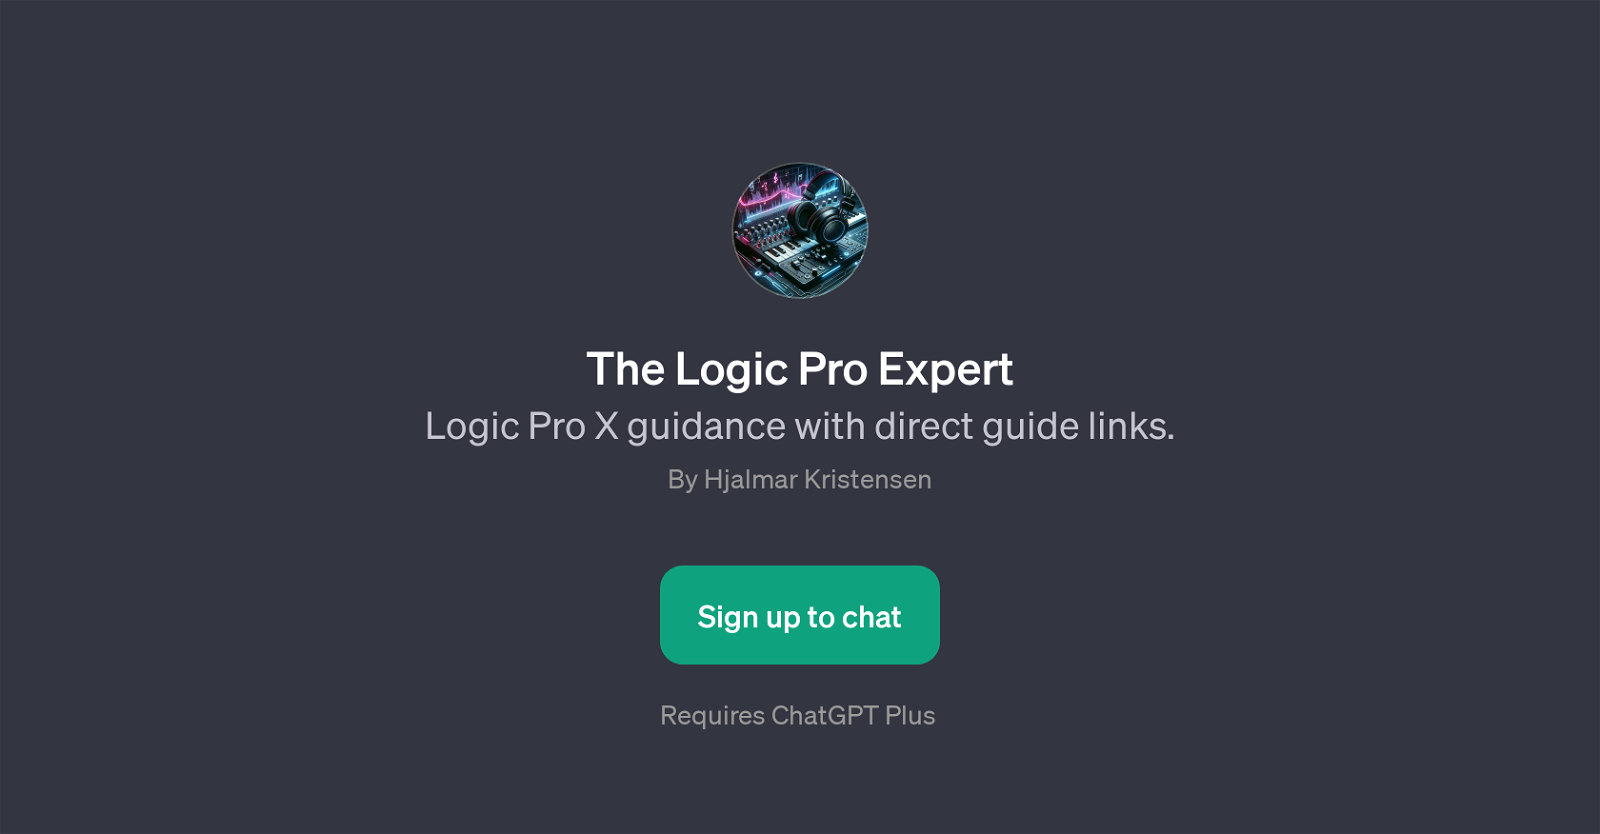 The Logic Pro Expert website